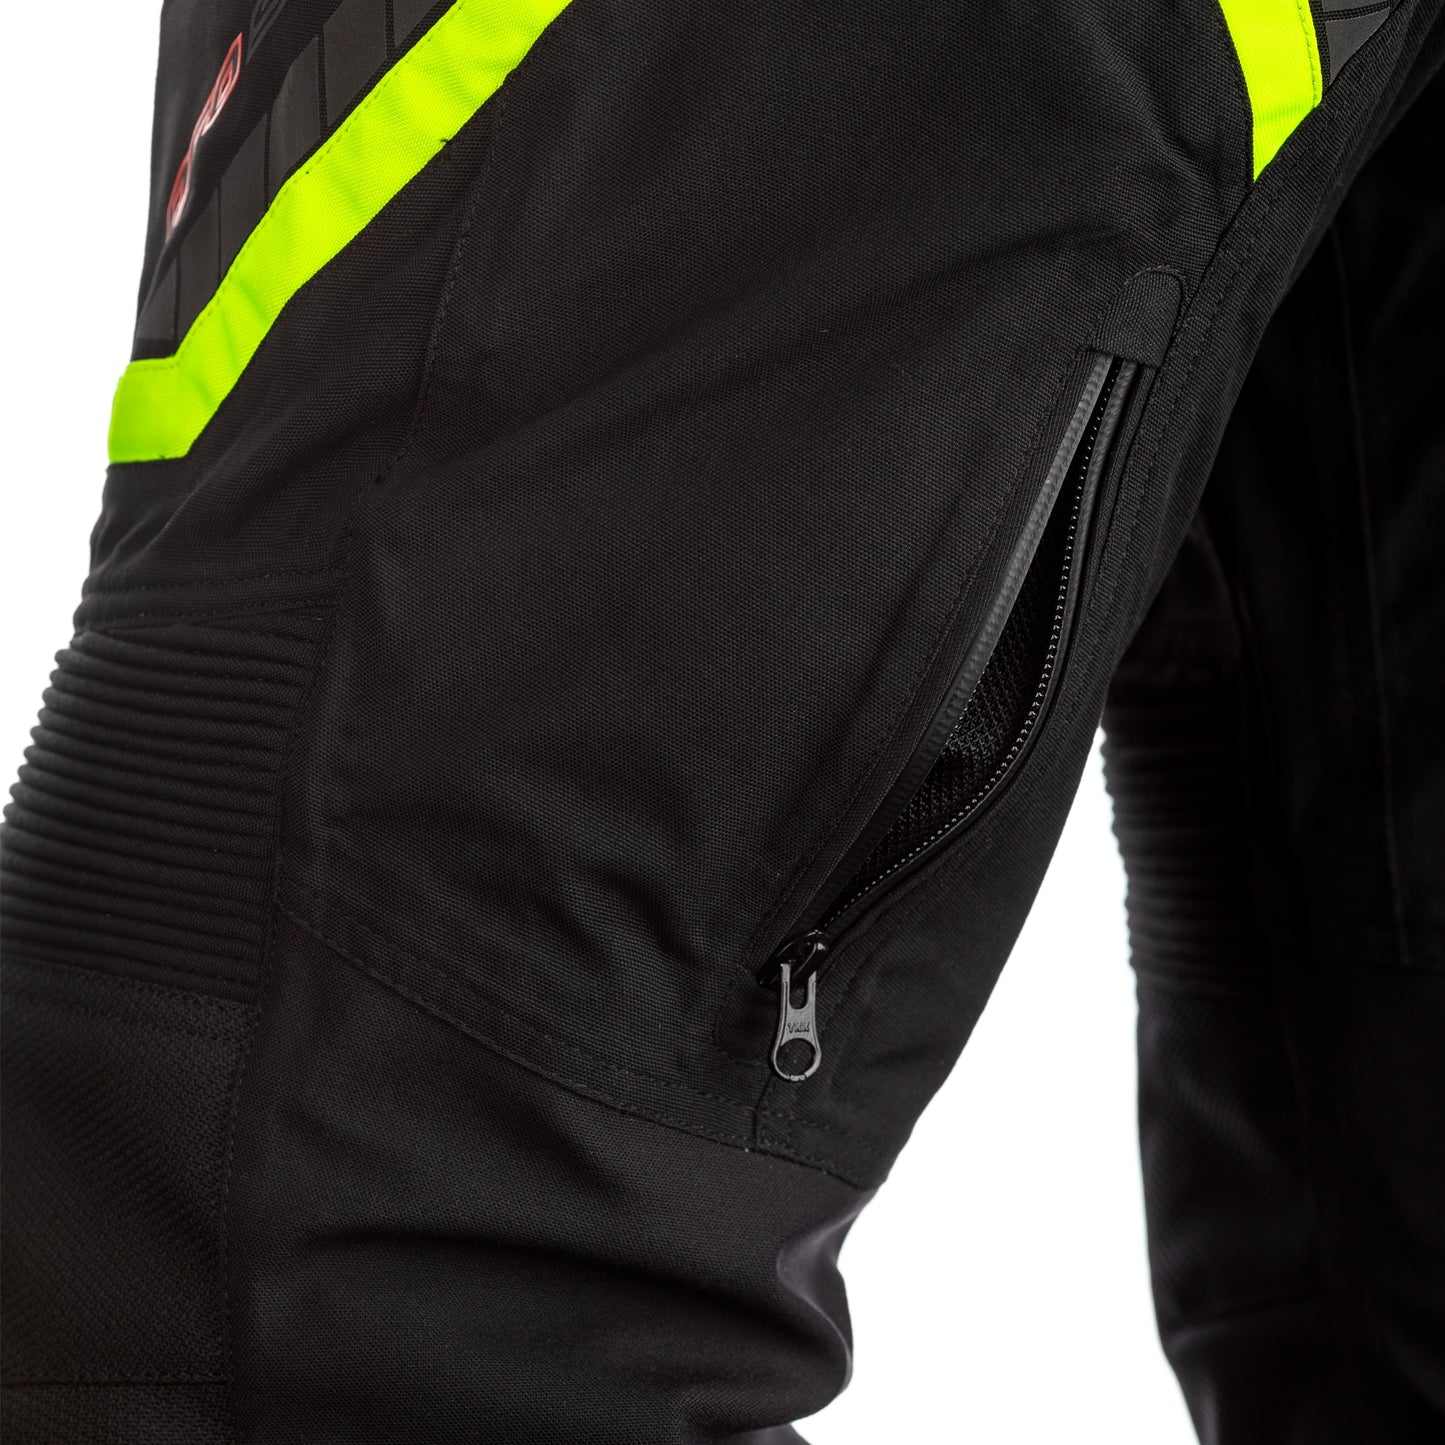 RST Pro Series Pathfinder CE Mens Textile Jean - Black / Flo Yellow (2372)